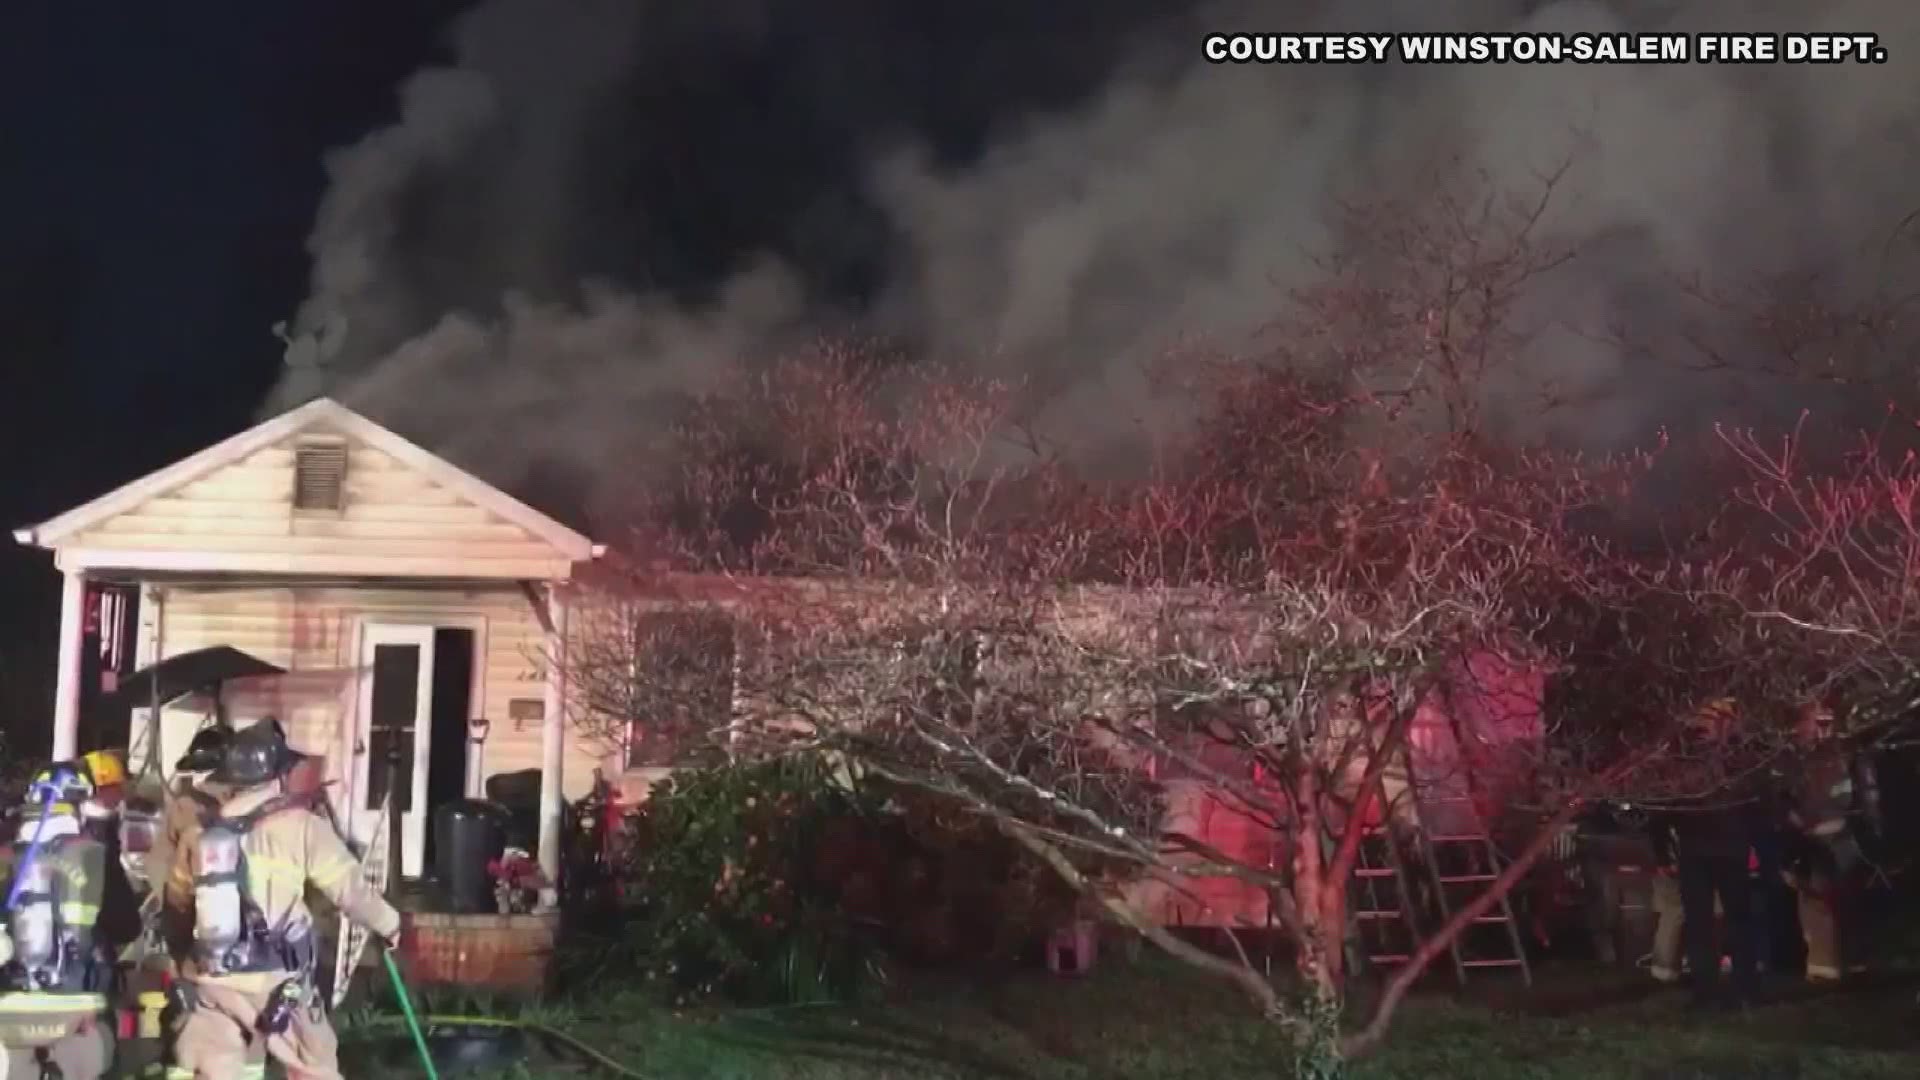 Winston-Salem firefighters battled a house fire on Boone Avenue Monday morning.